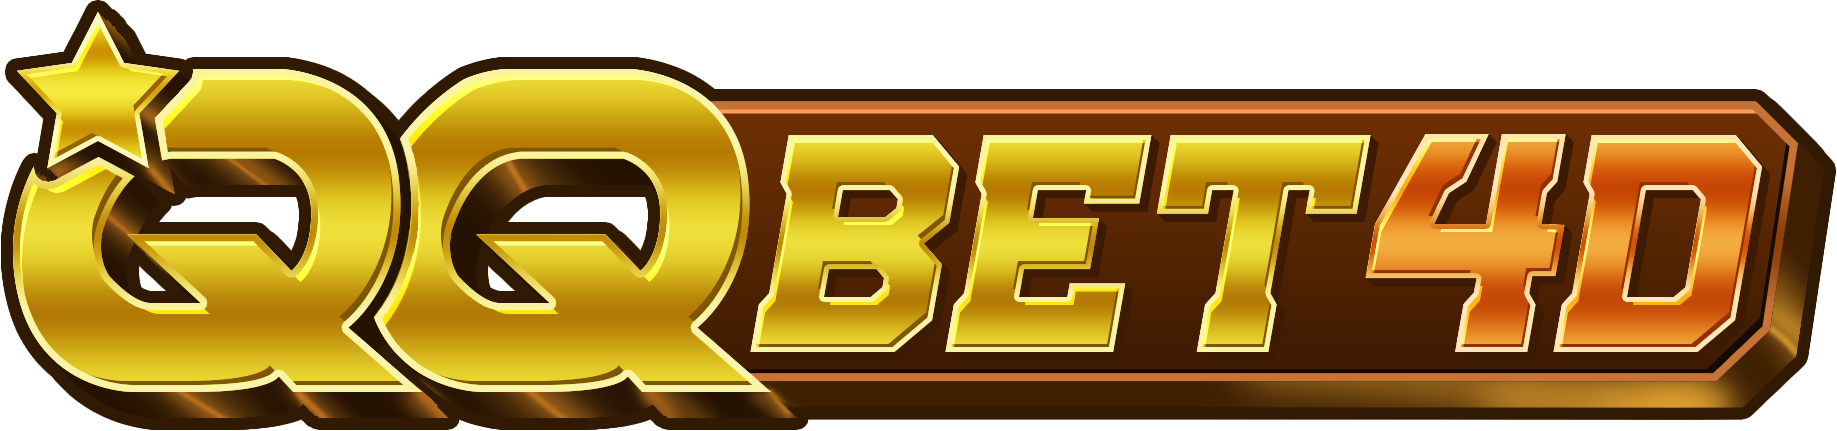 logo-QQBET4D